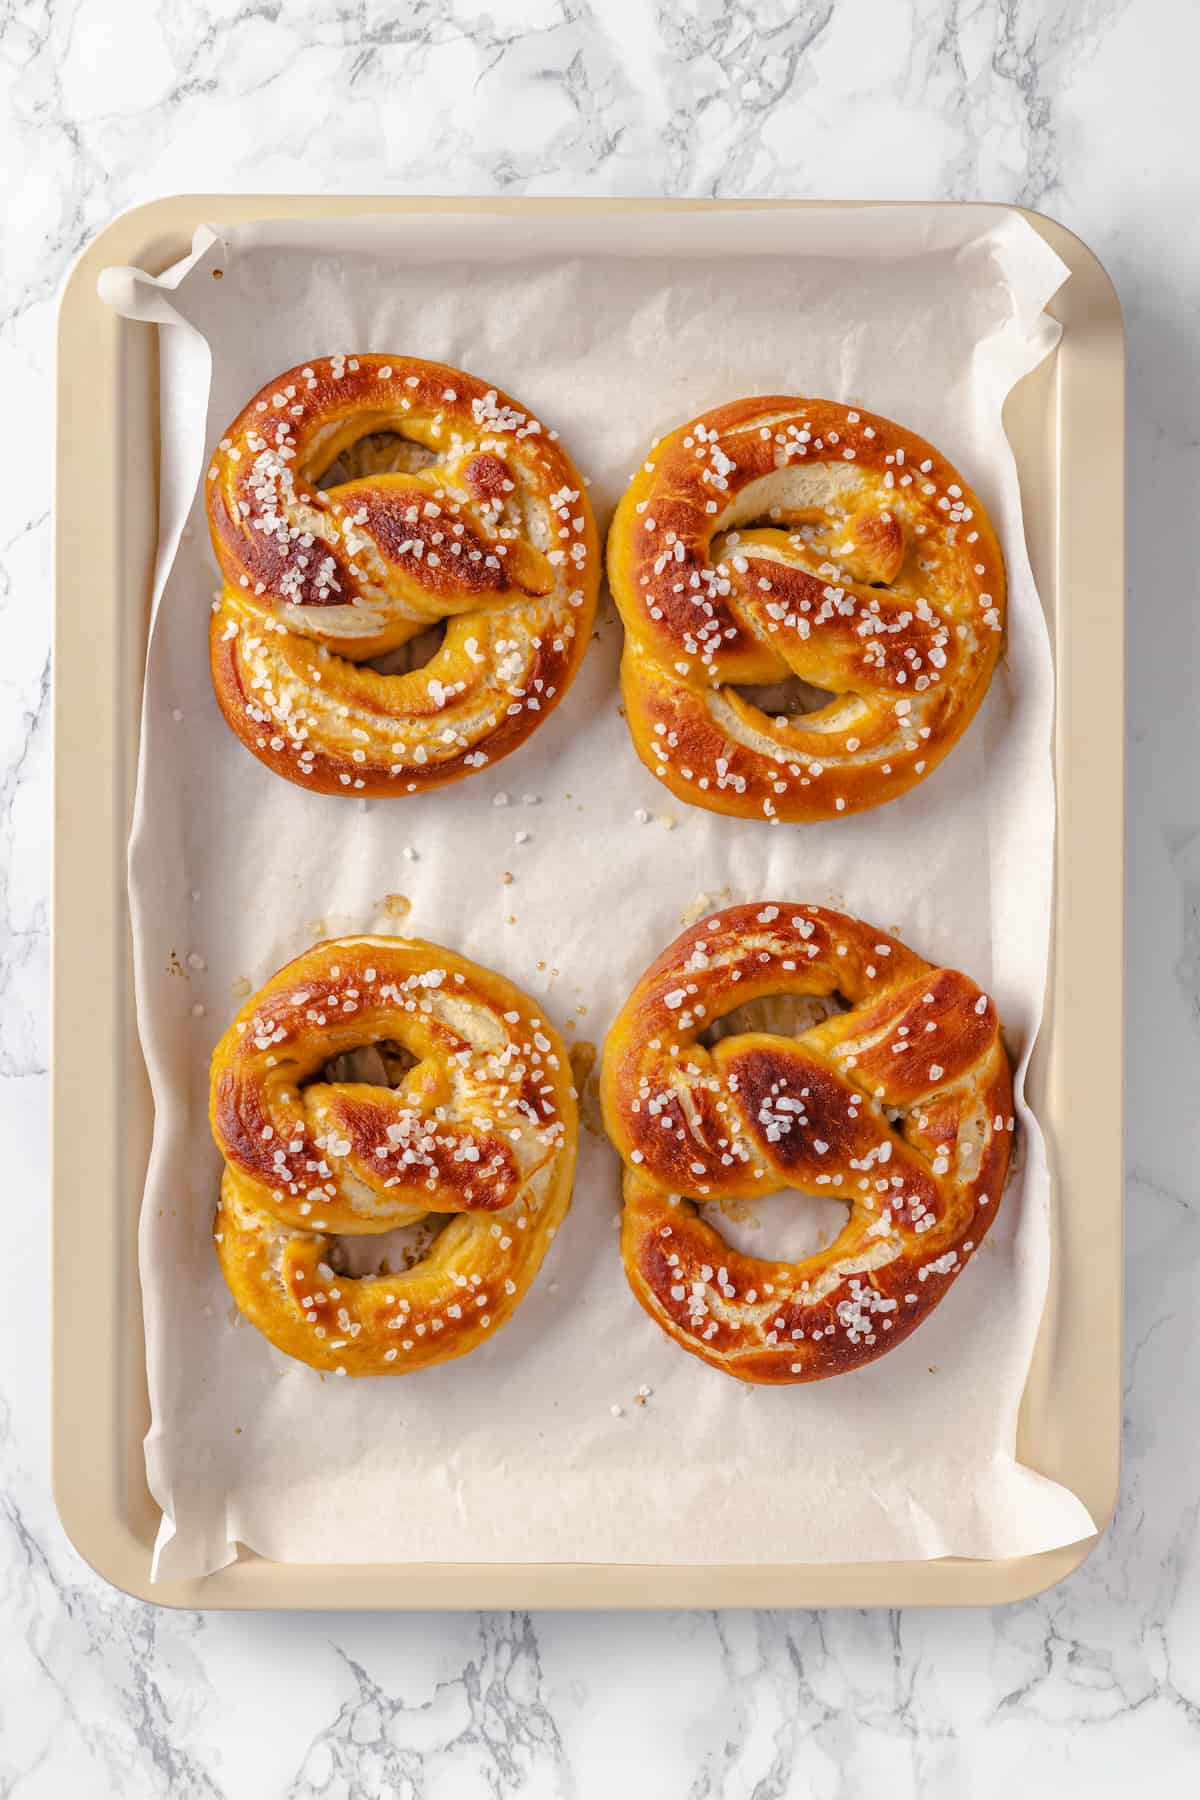 Overhead view of 4 vegan pretzels on sheet pan